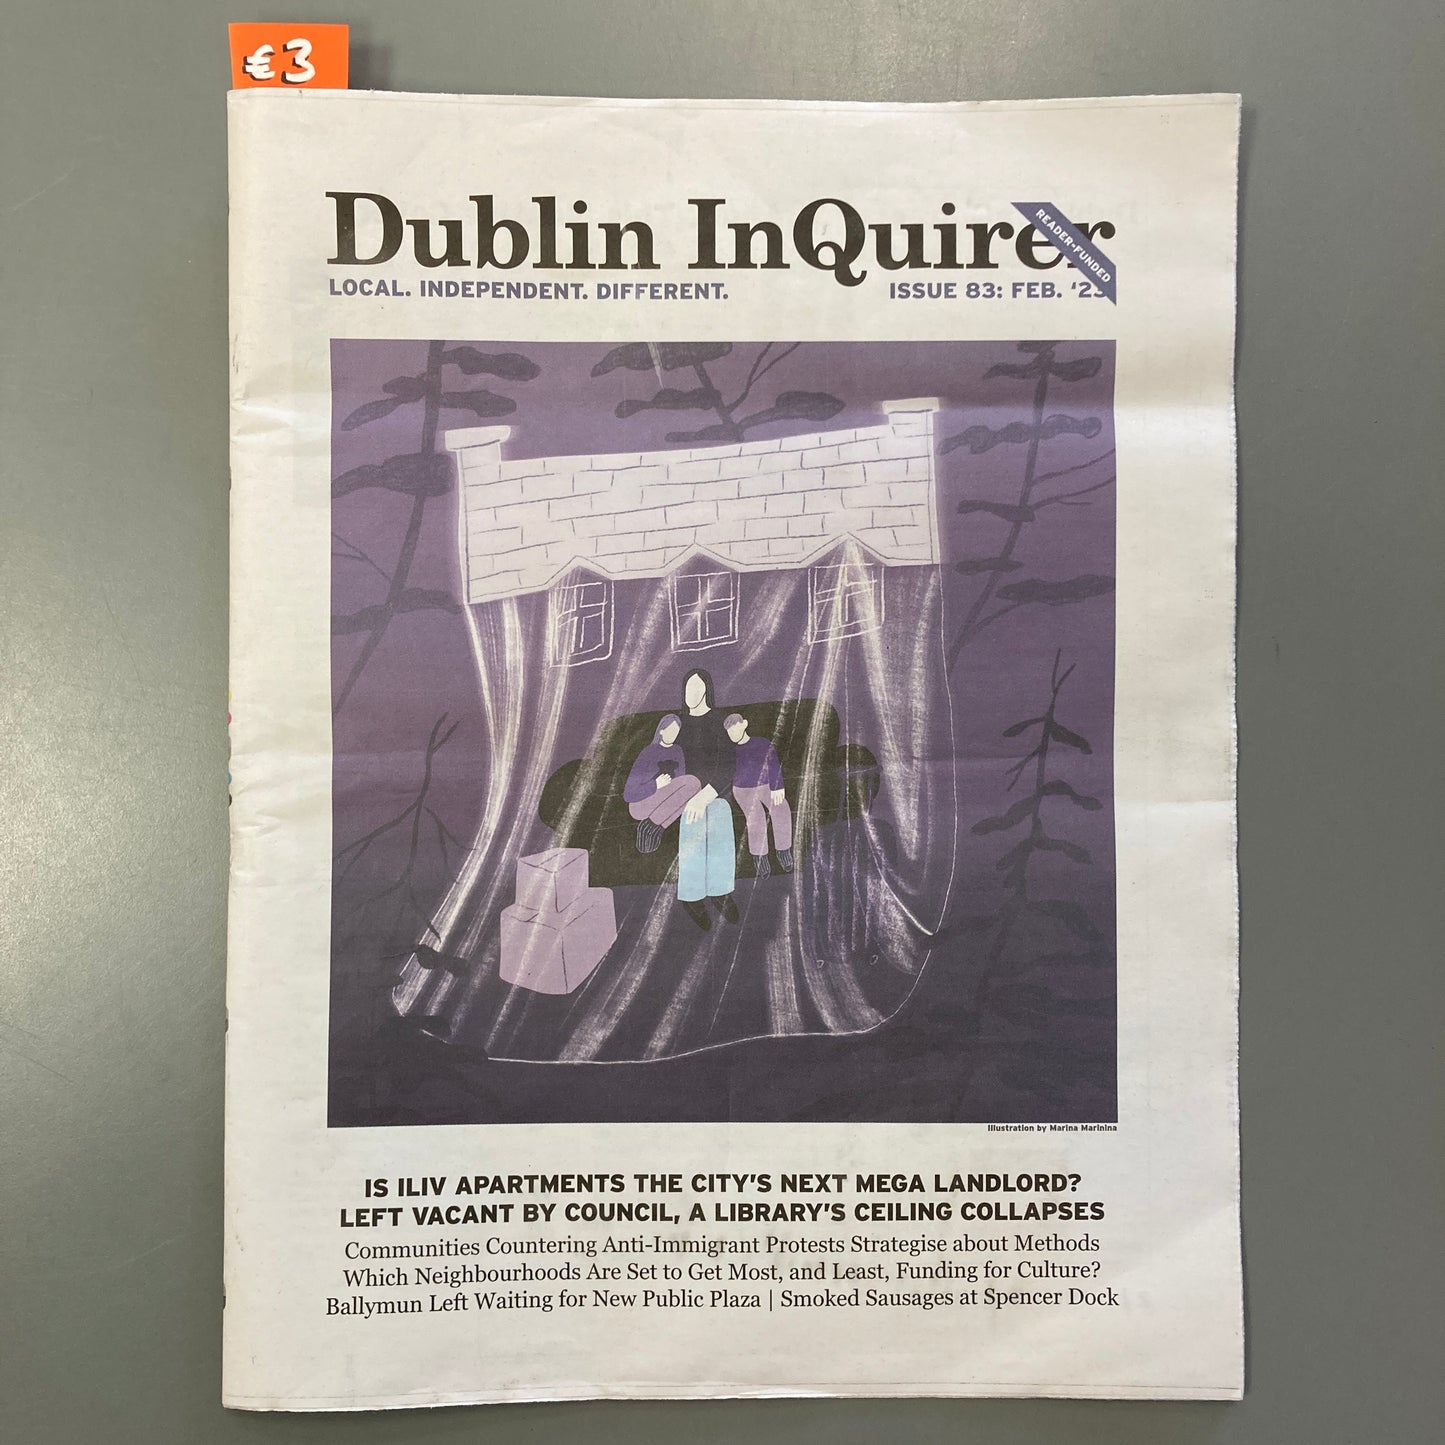 Dublin Inquirer: Issue 83